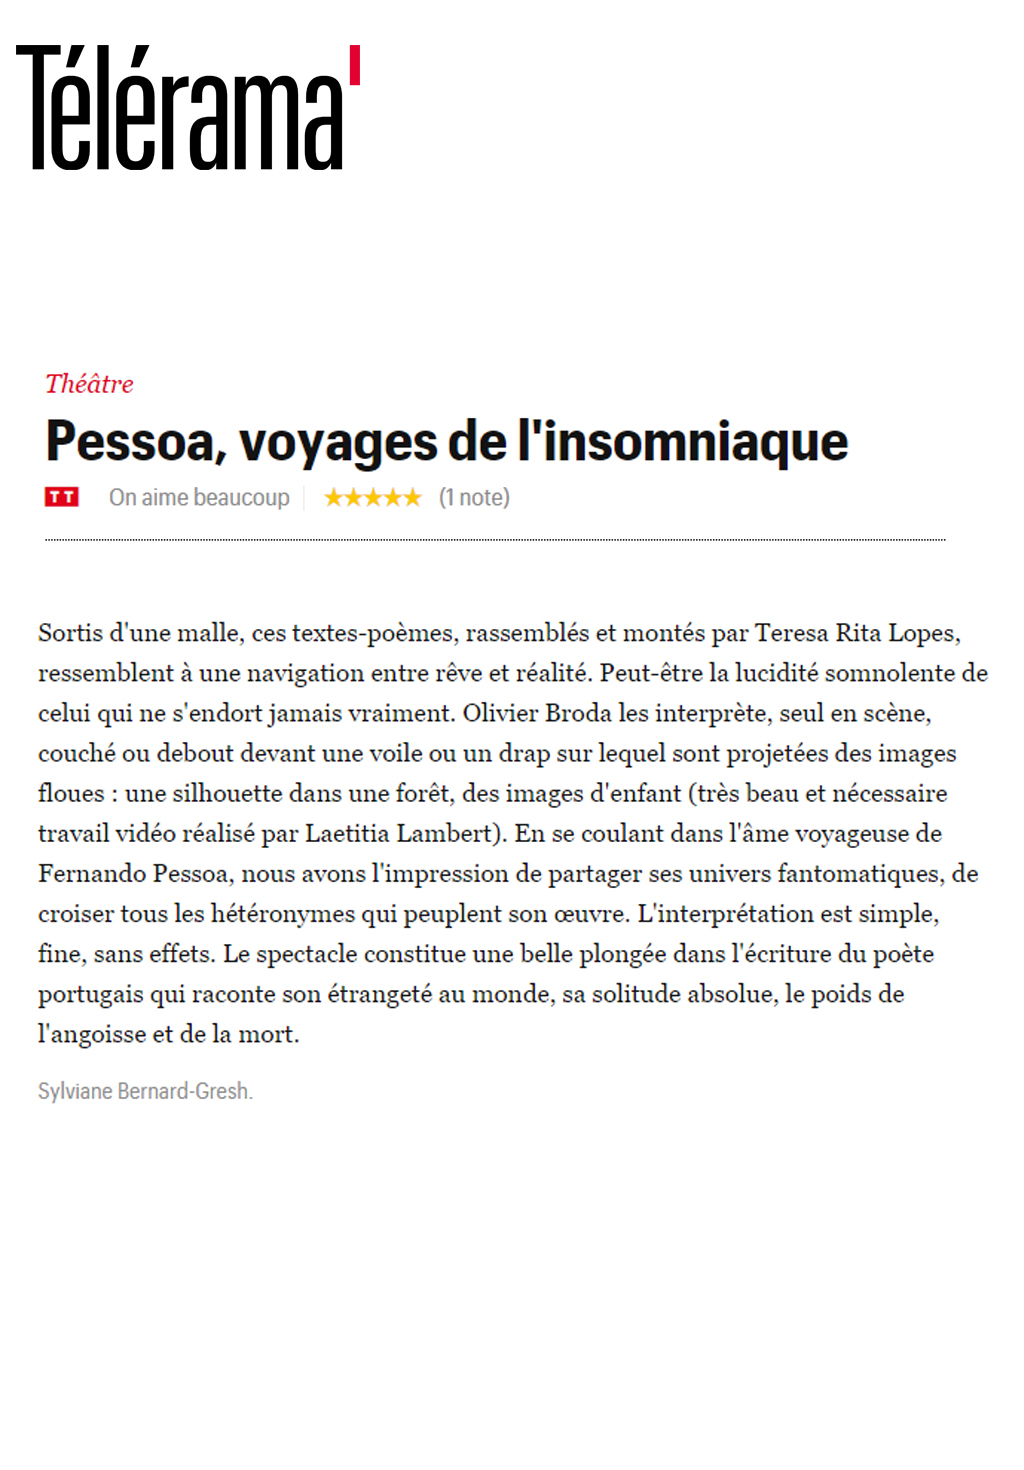 Article_Télérama_Pessoa